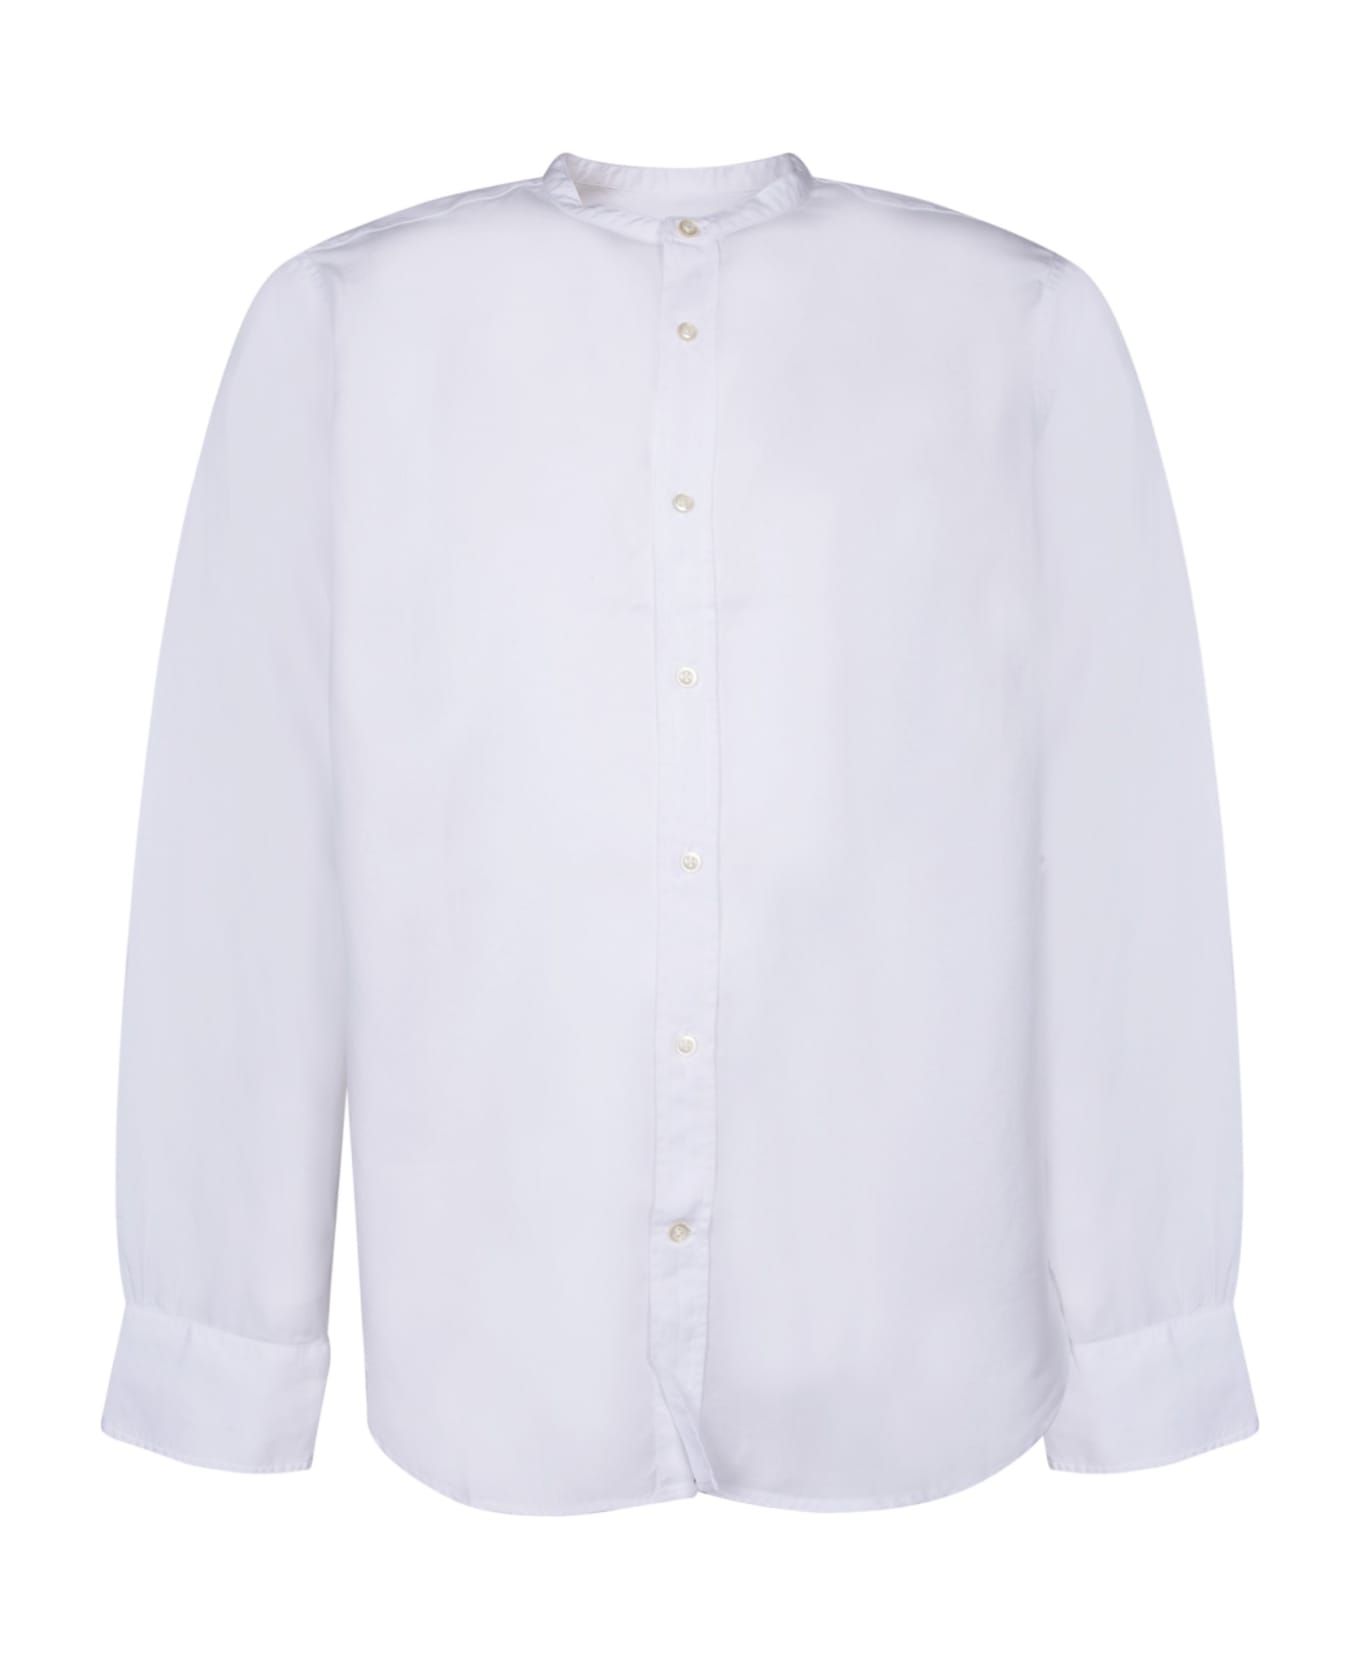 Officine Générale Korean Collar White Shirt - White